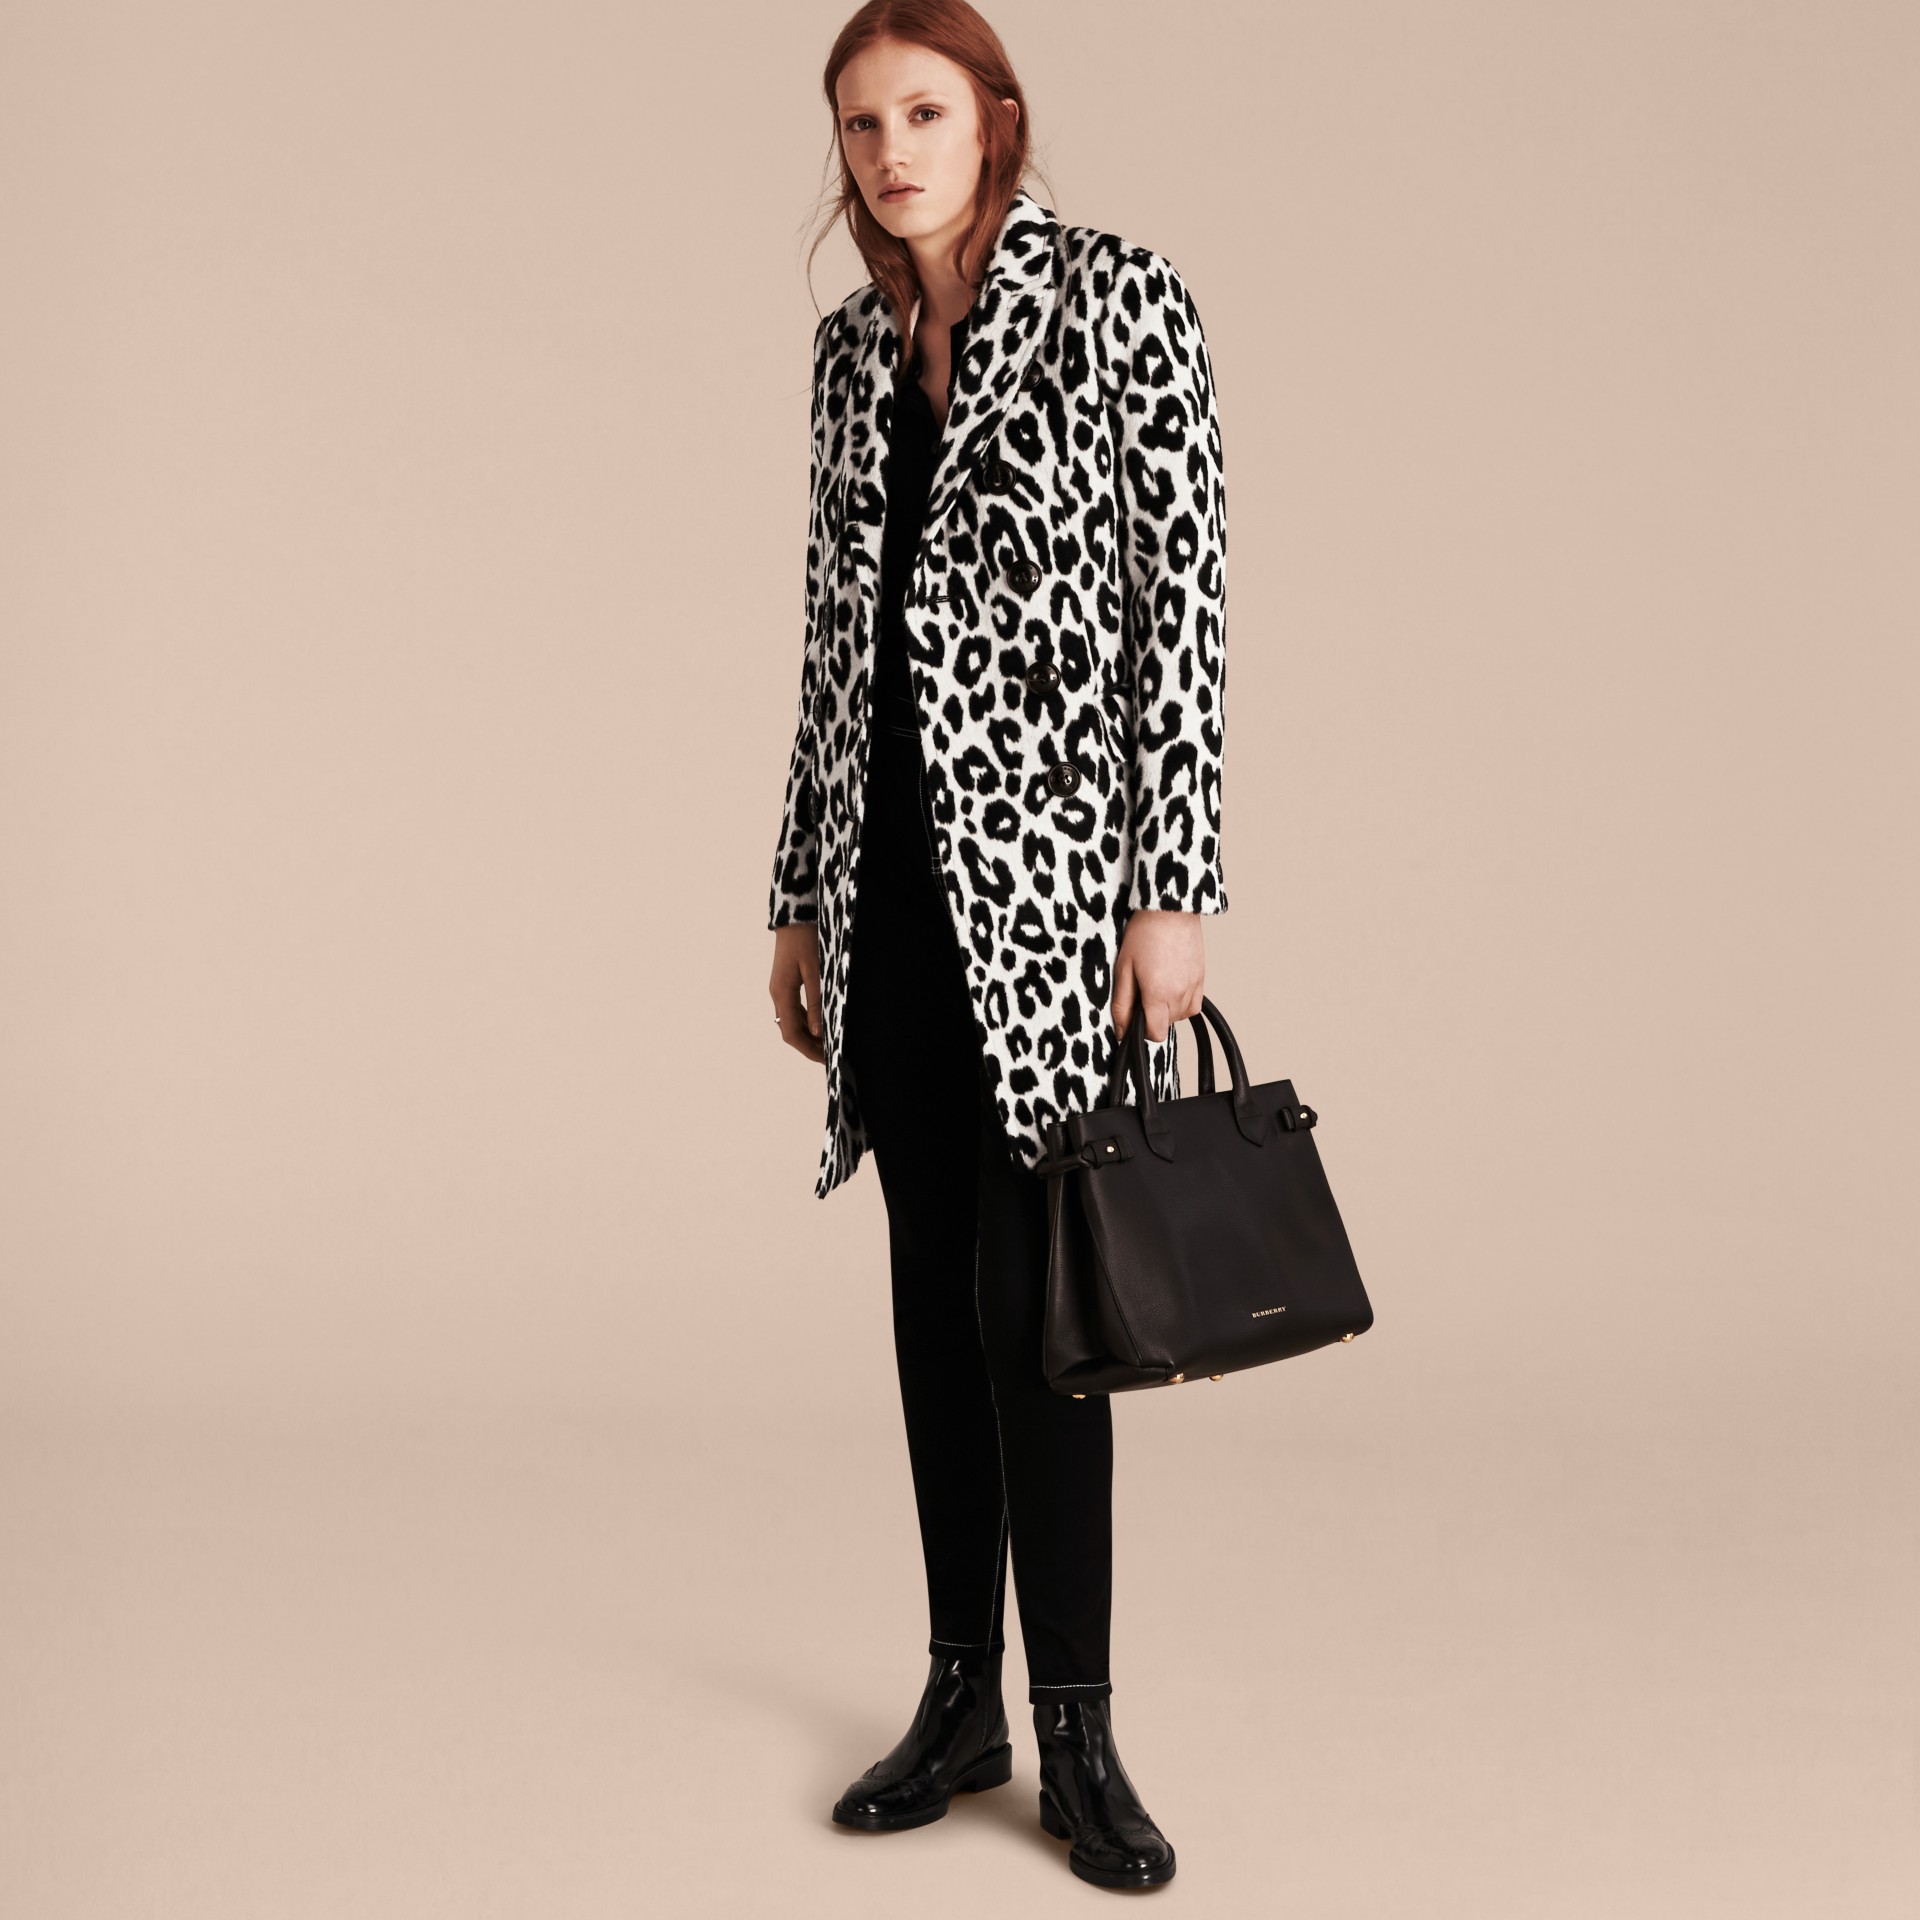 Leopard Jacquard Lama Wool Coat in Black/white - Women | Burberry United States